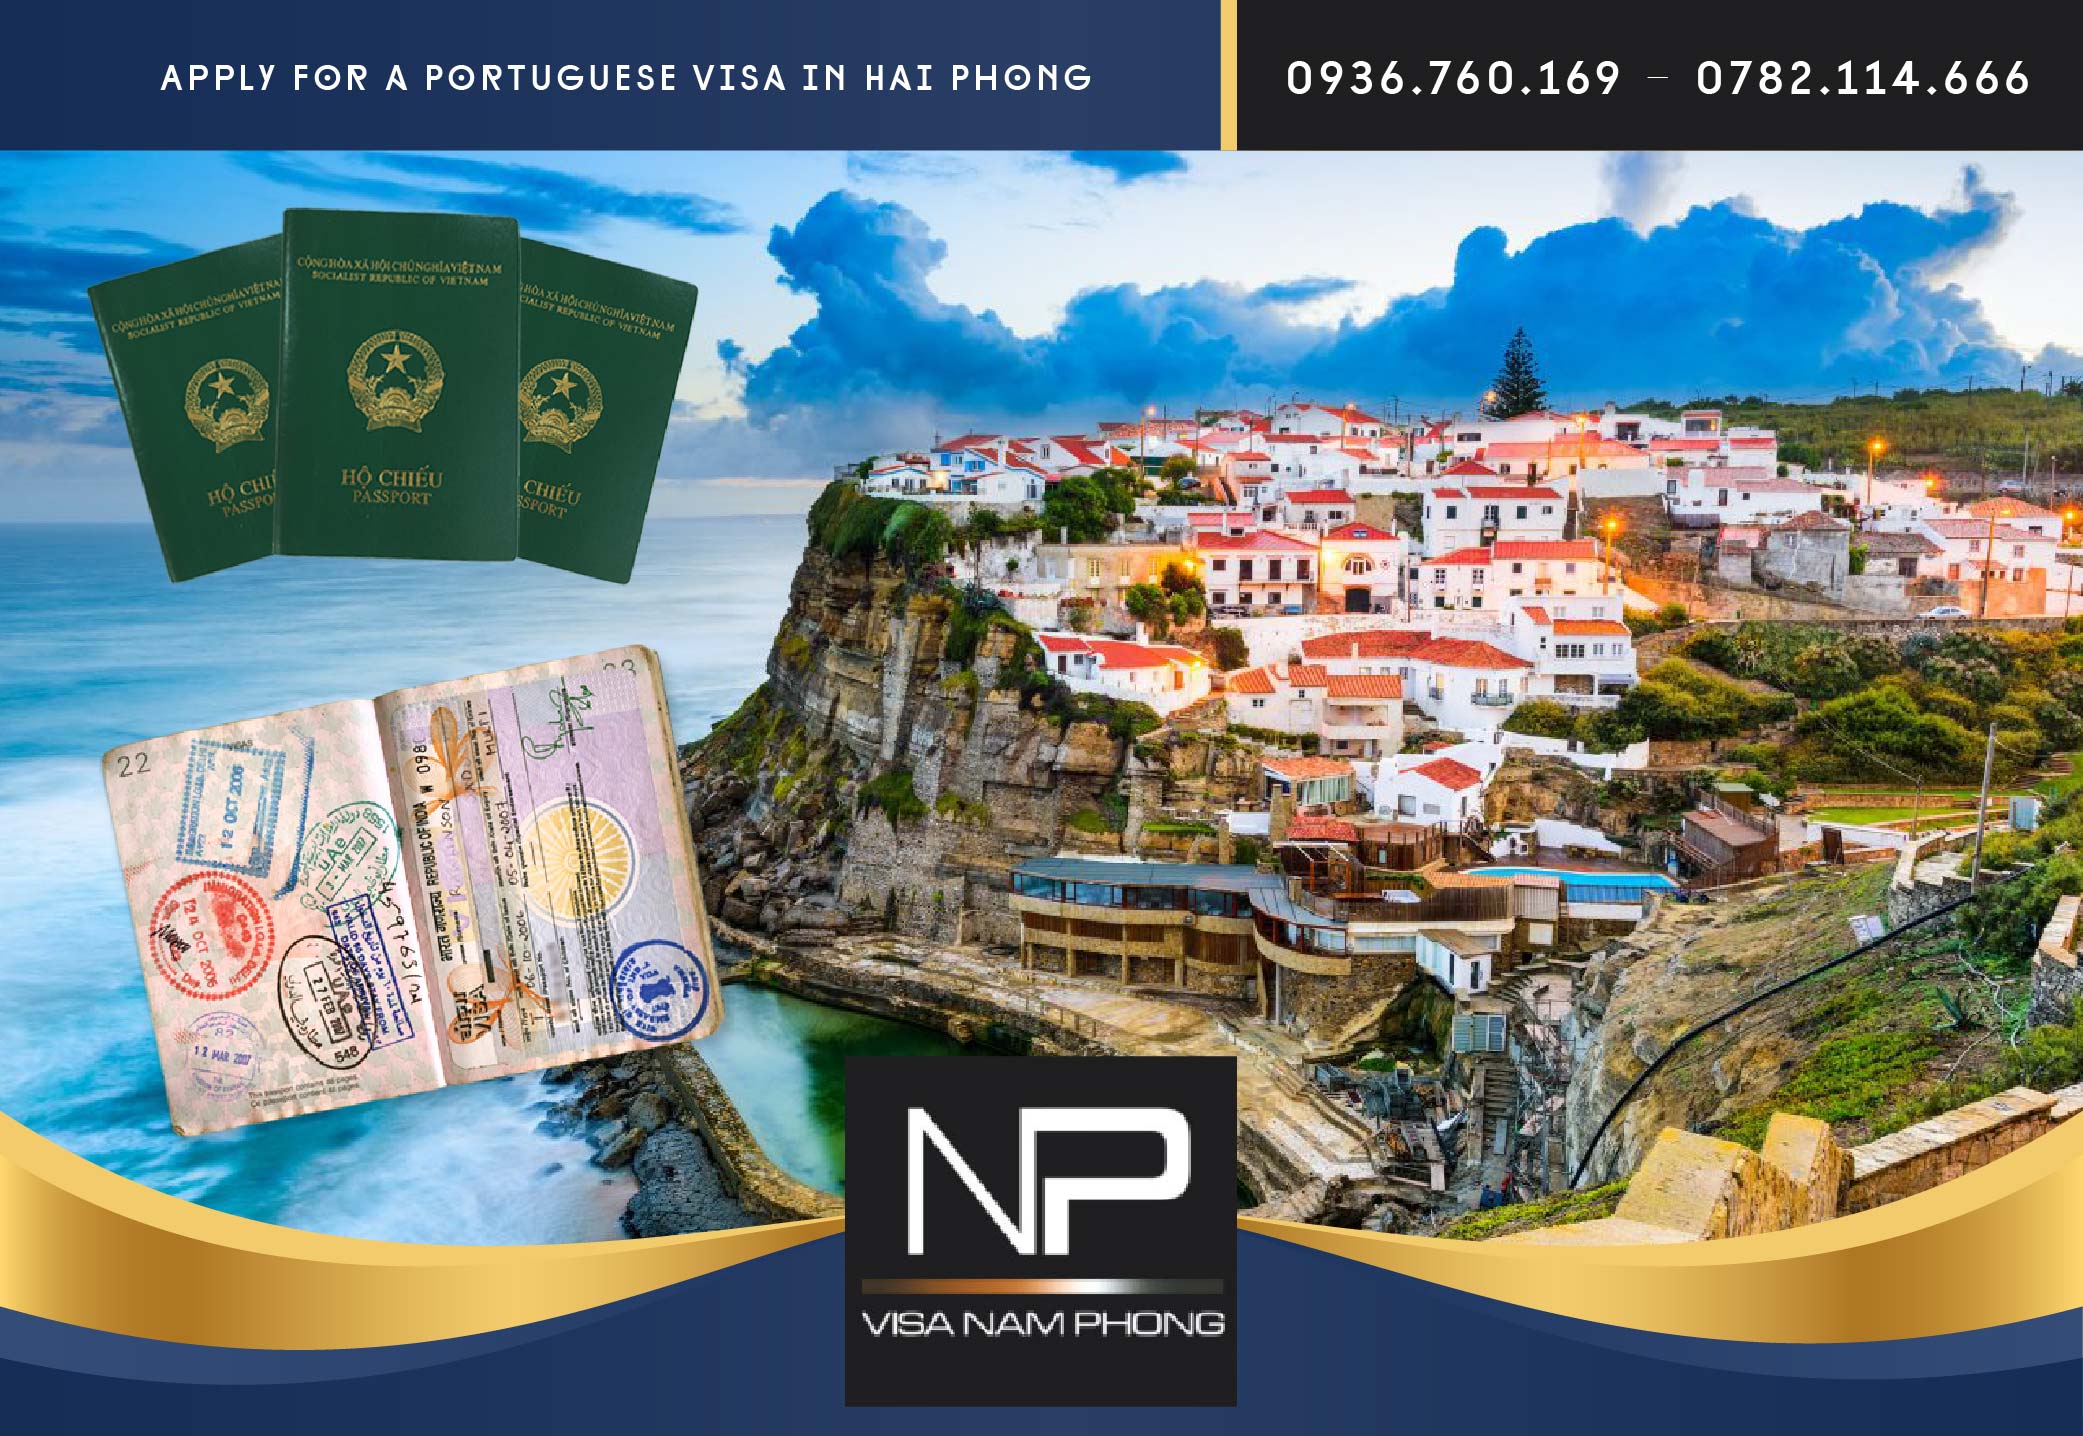 Apply for a Portuguese visa in Hai Phong